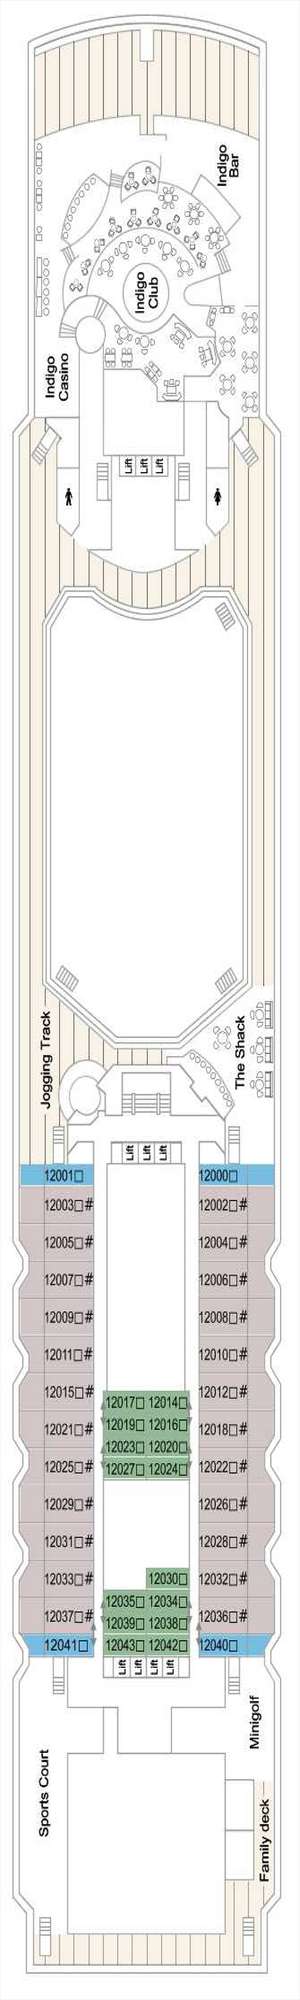 Deck plan for Marella Explorer